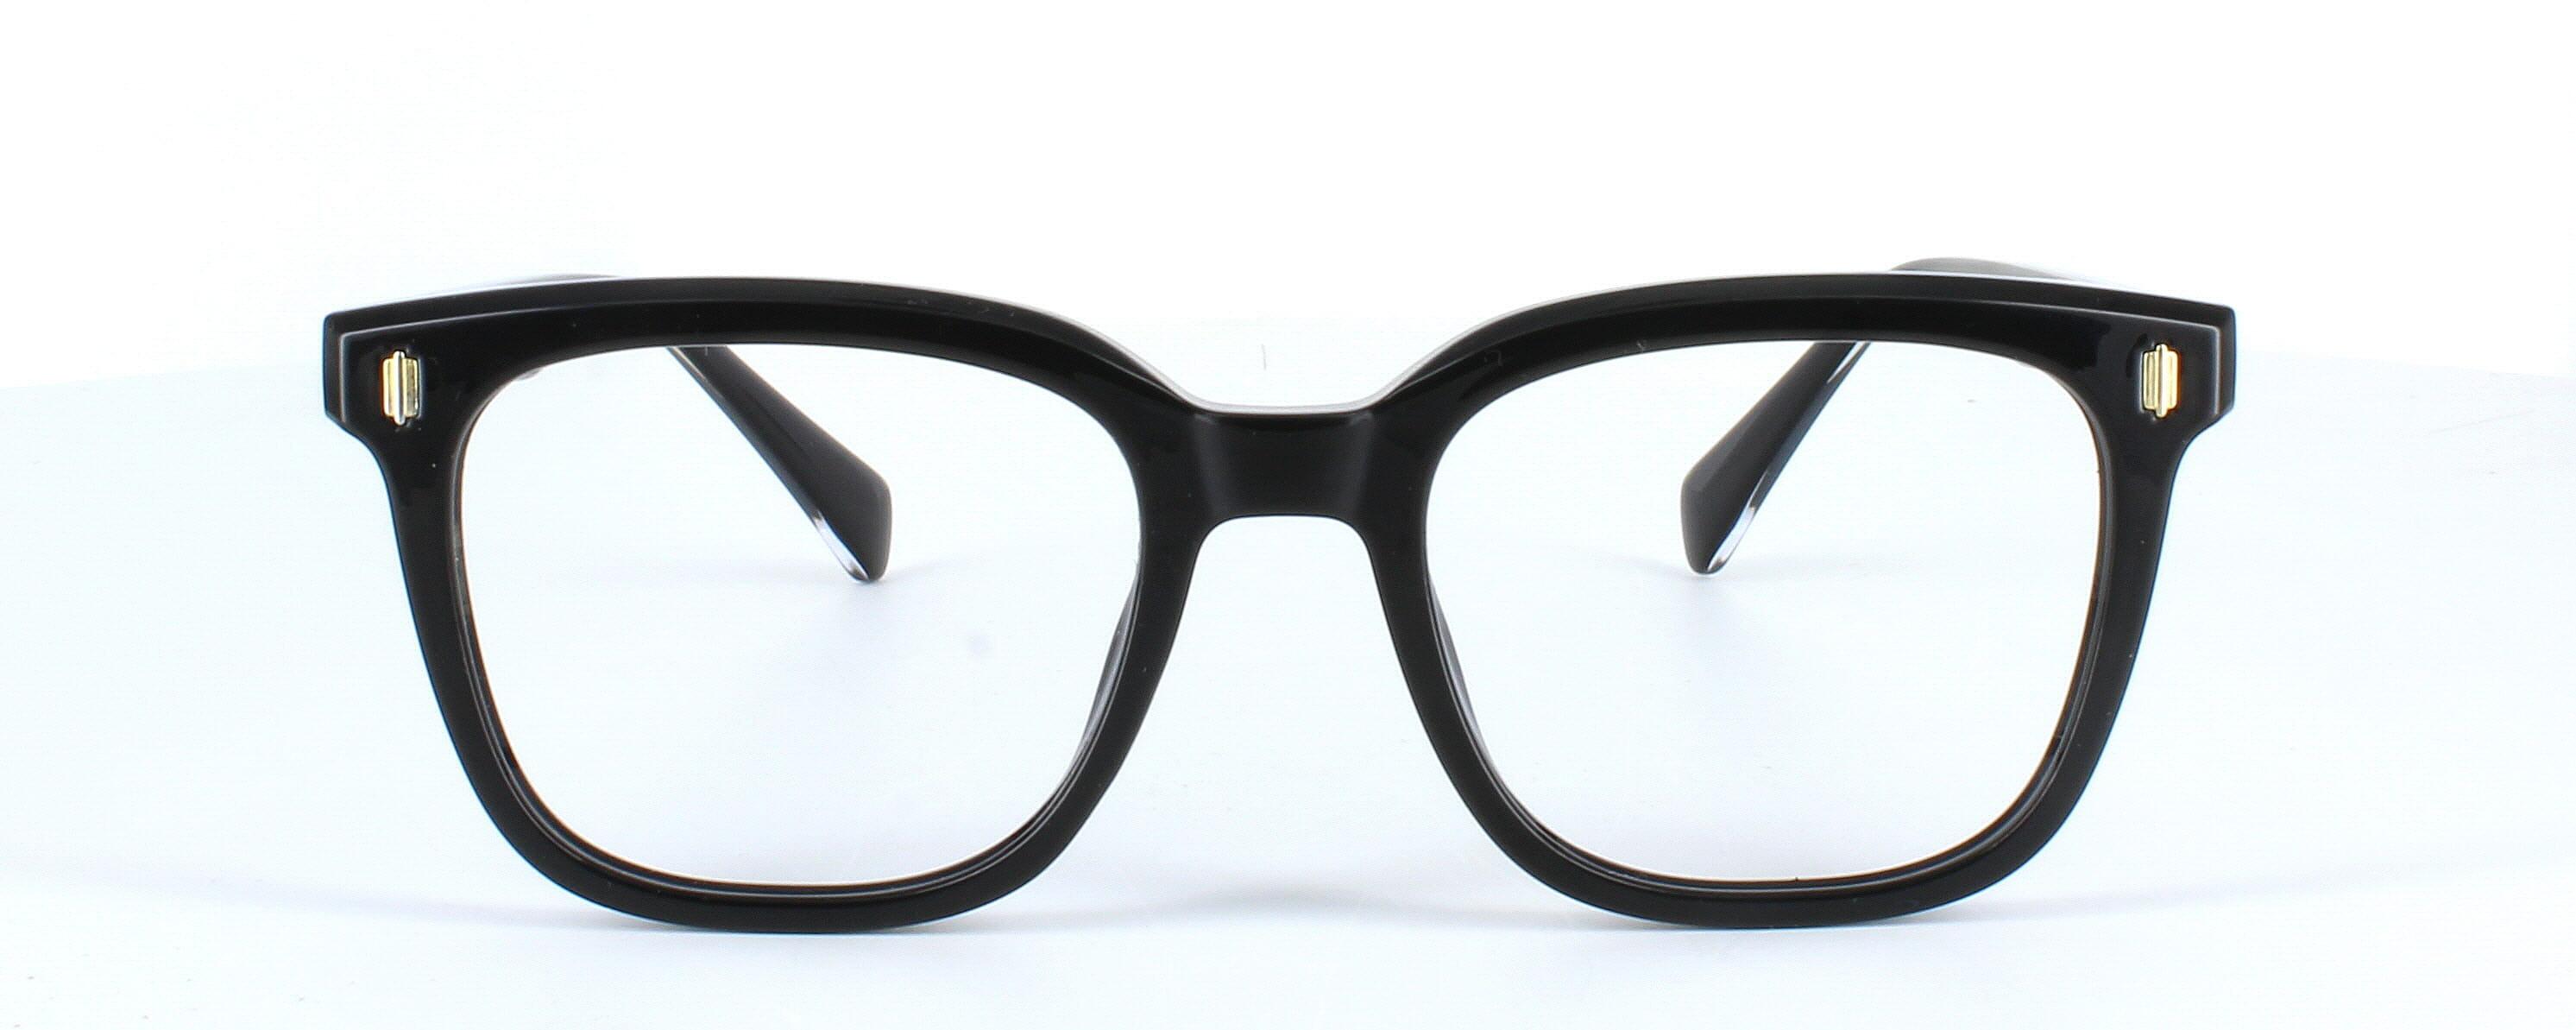 Edward Scotts TRBC901 - Black - Unisex acetate retro style glasses frame with square shaped lenses - image view 2